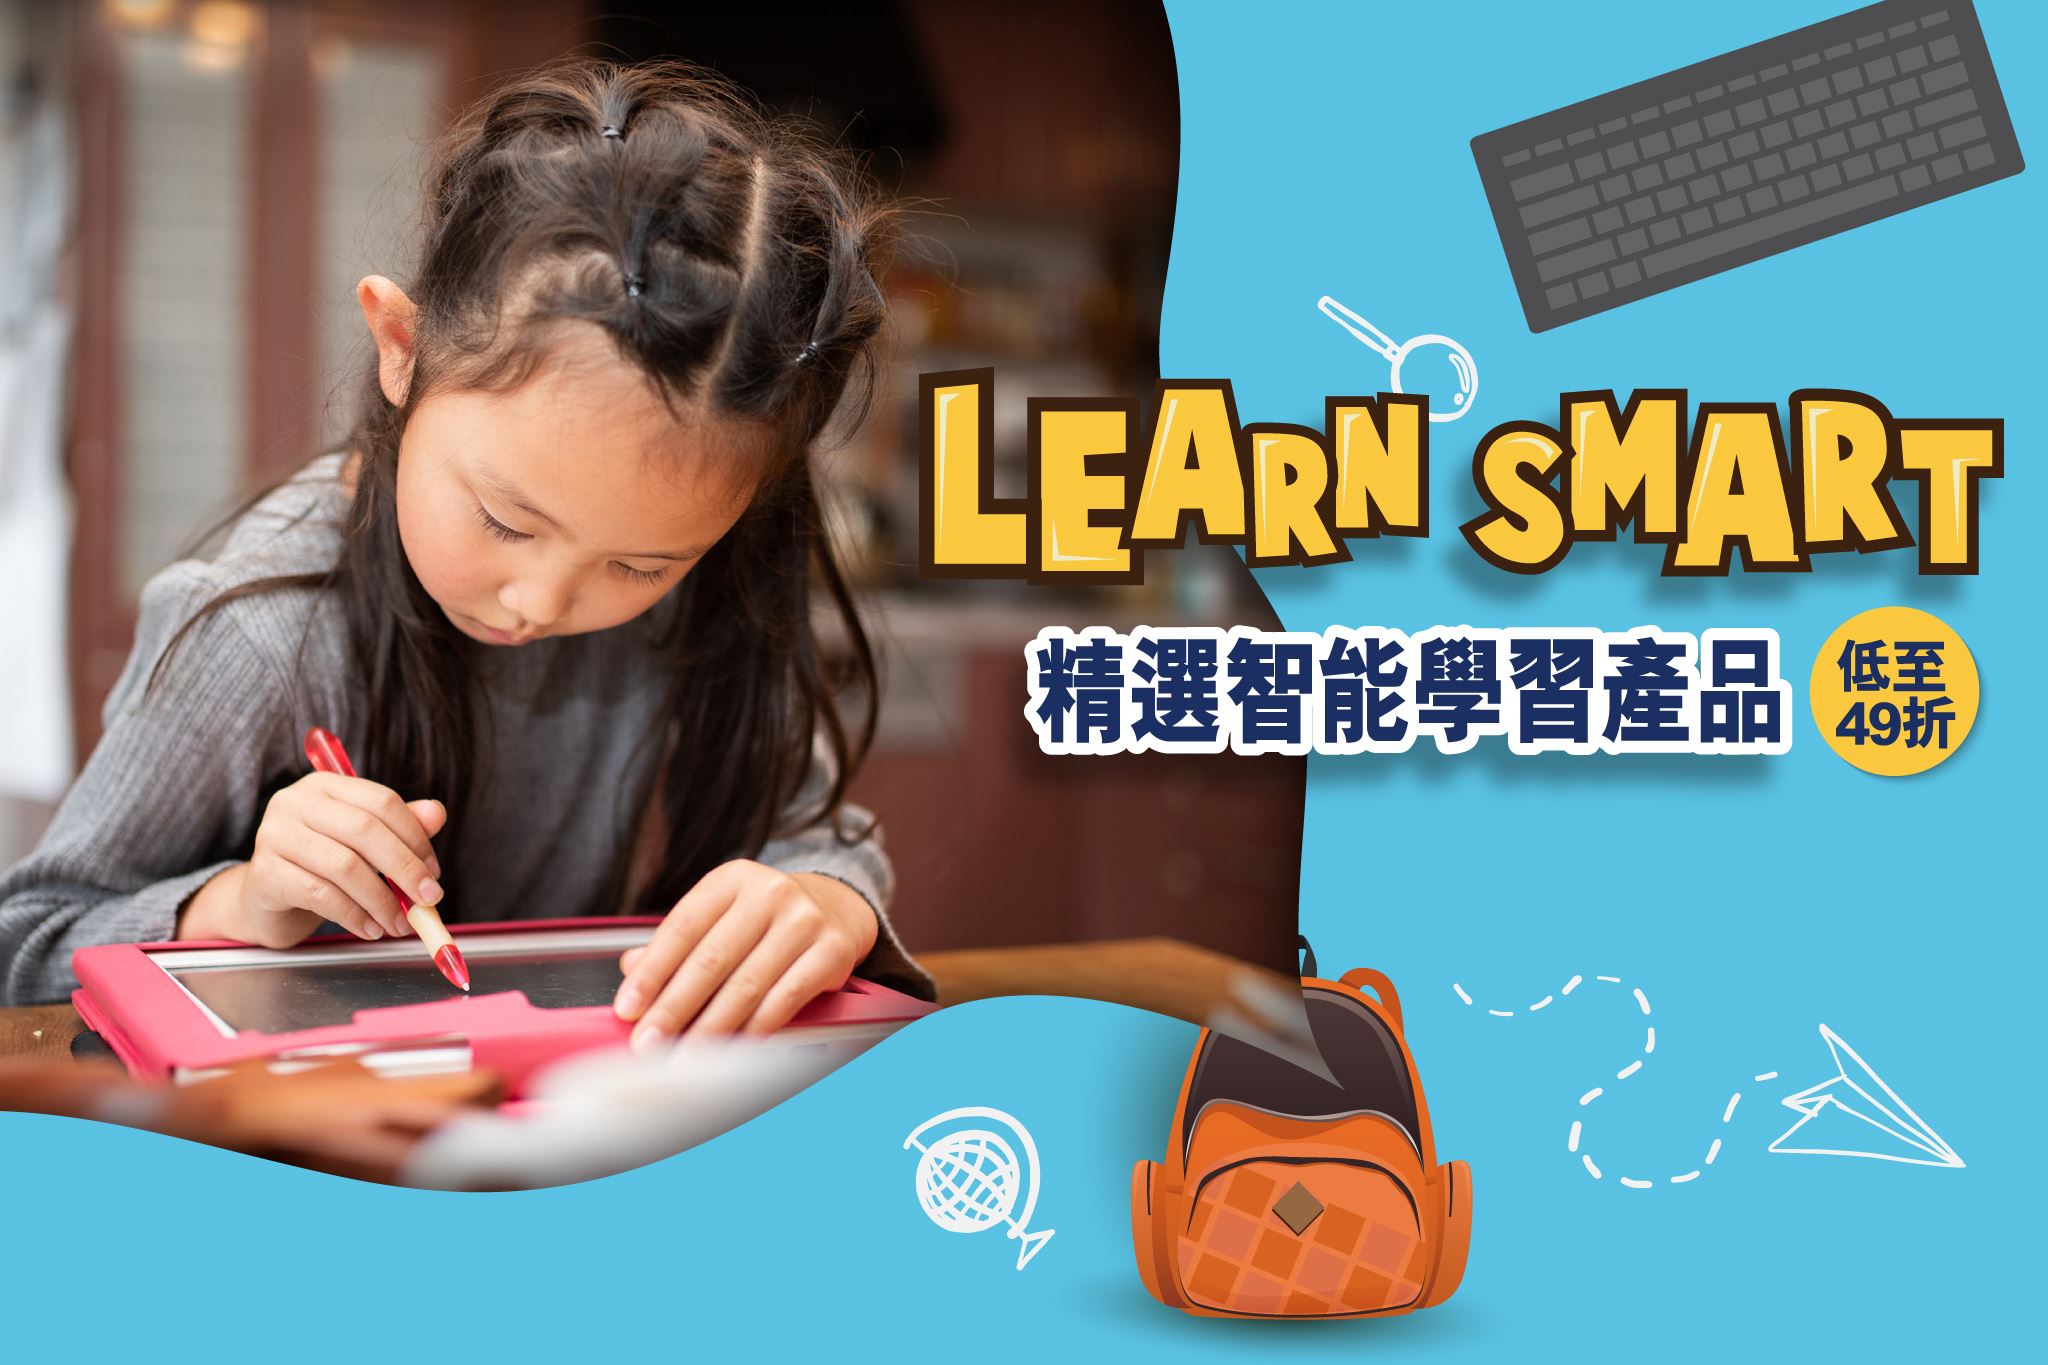 【Learn Smart 在家學習有辦法💡精選智能學習產品低至49折】